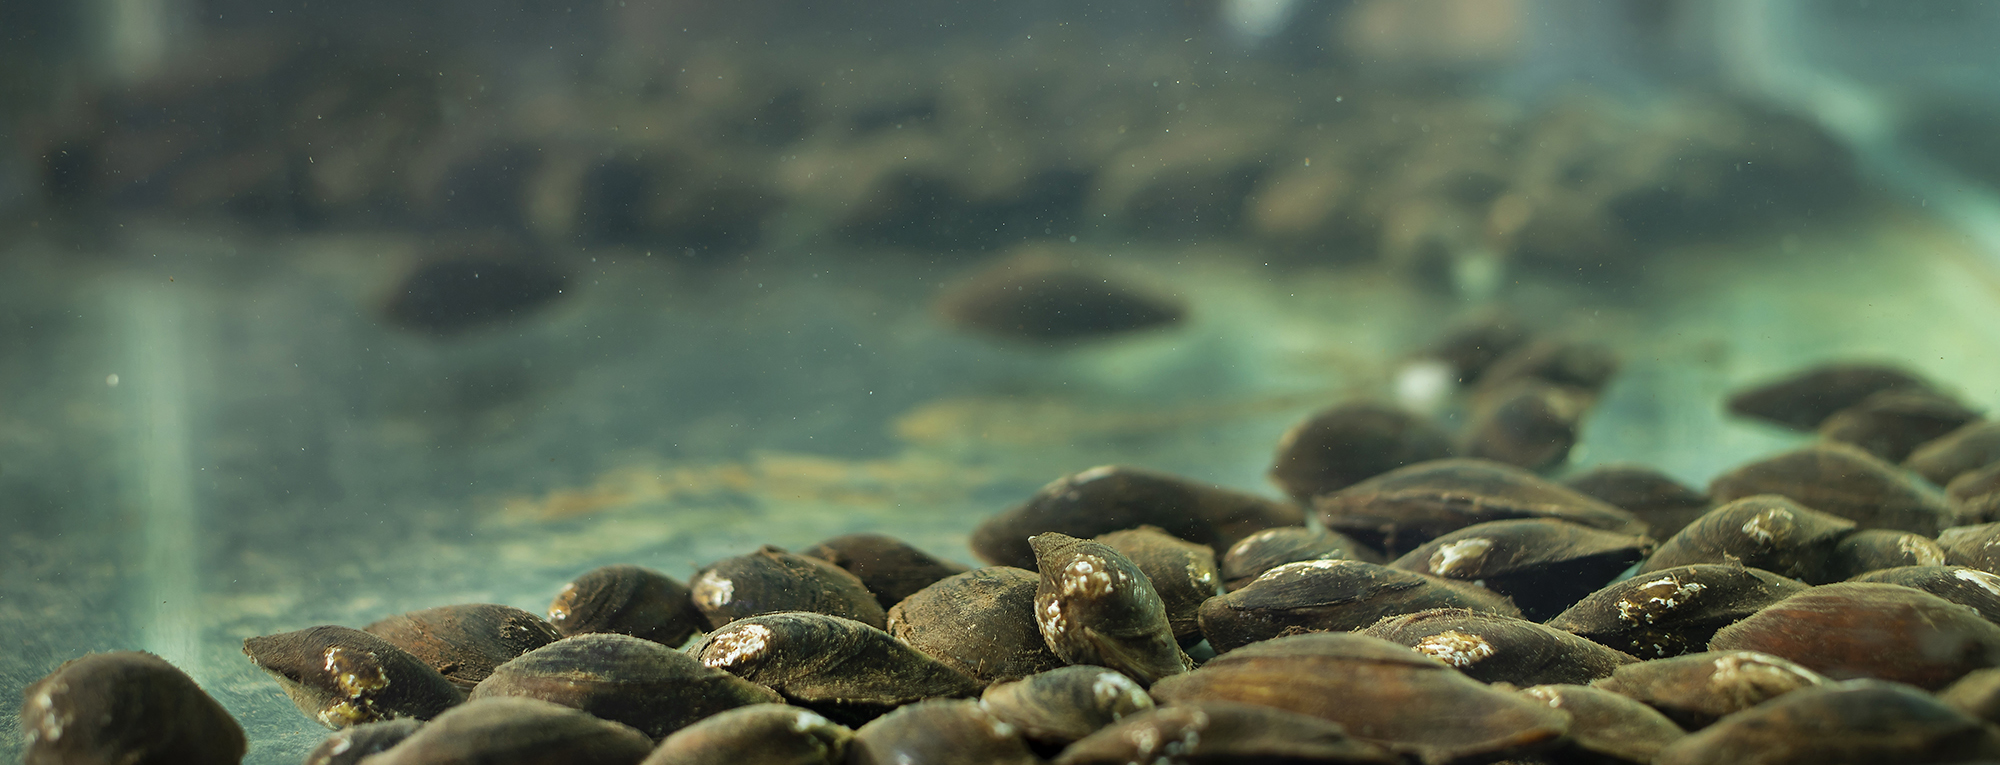 fresh water mussels in a tank